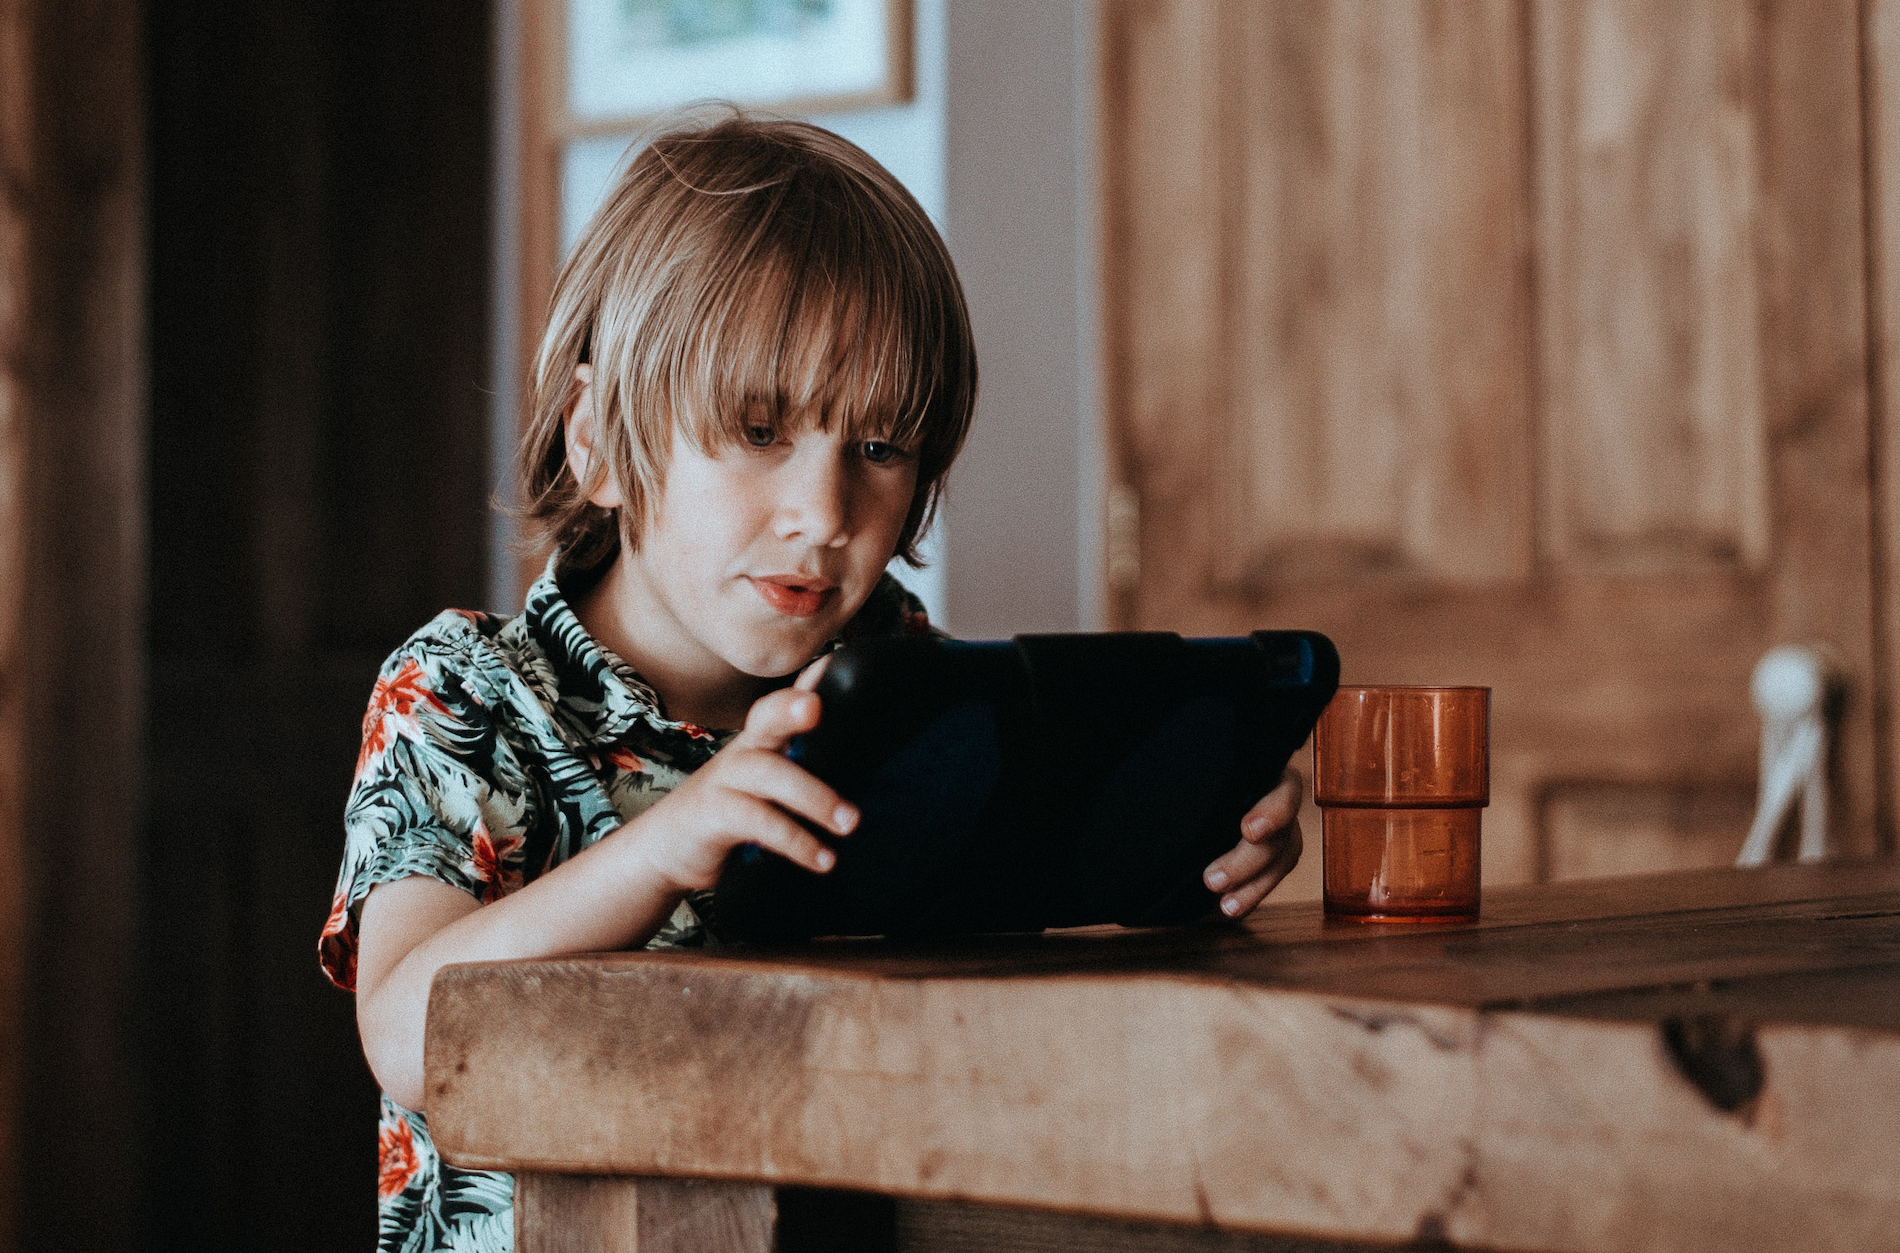 A boy watching a tablet computer